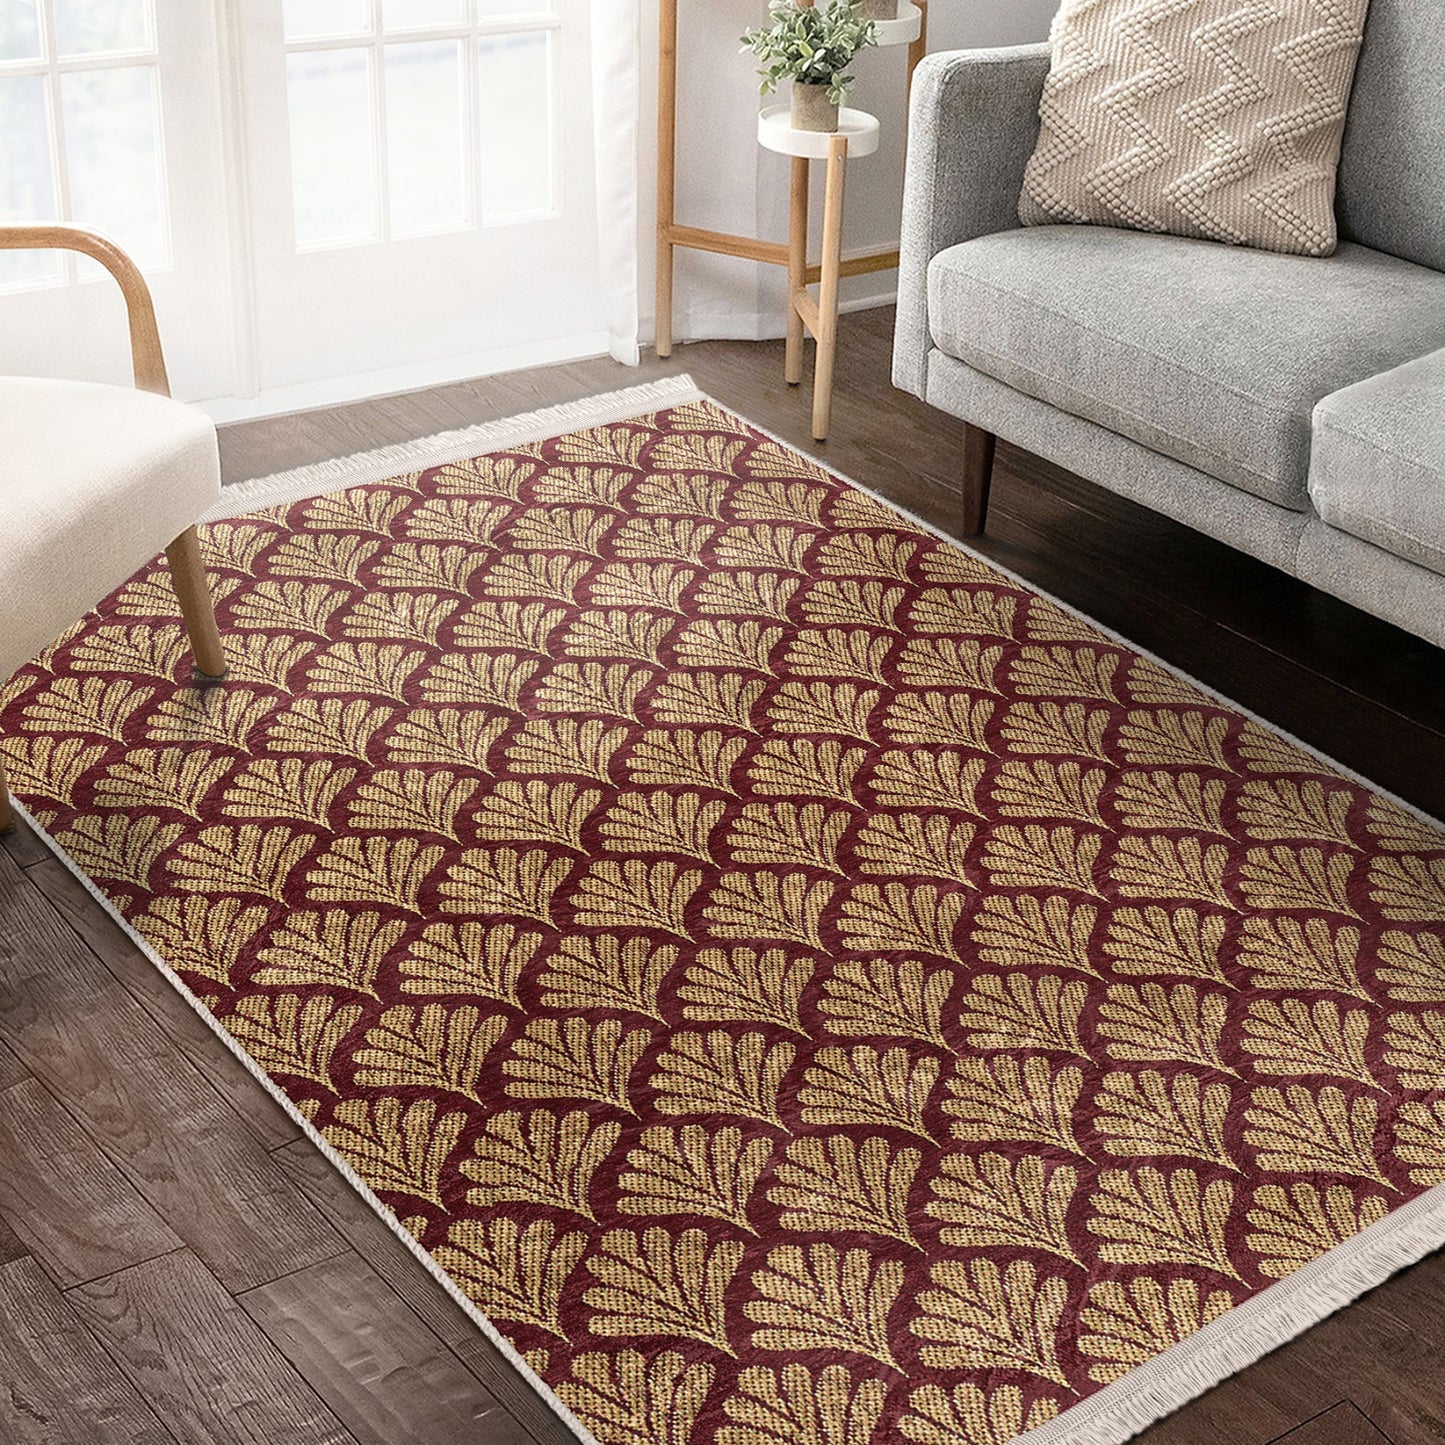 Elegant Home Decor Rug with Leaf Pattern and Gold Motif